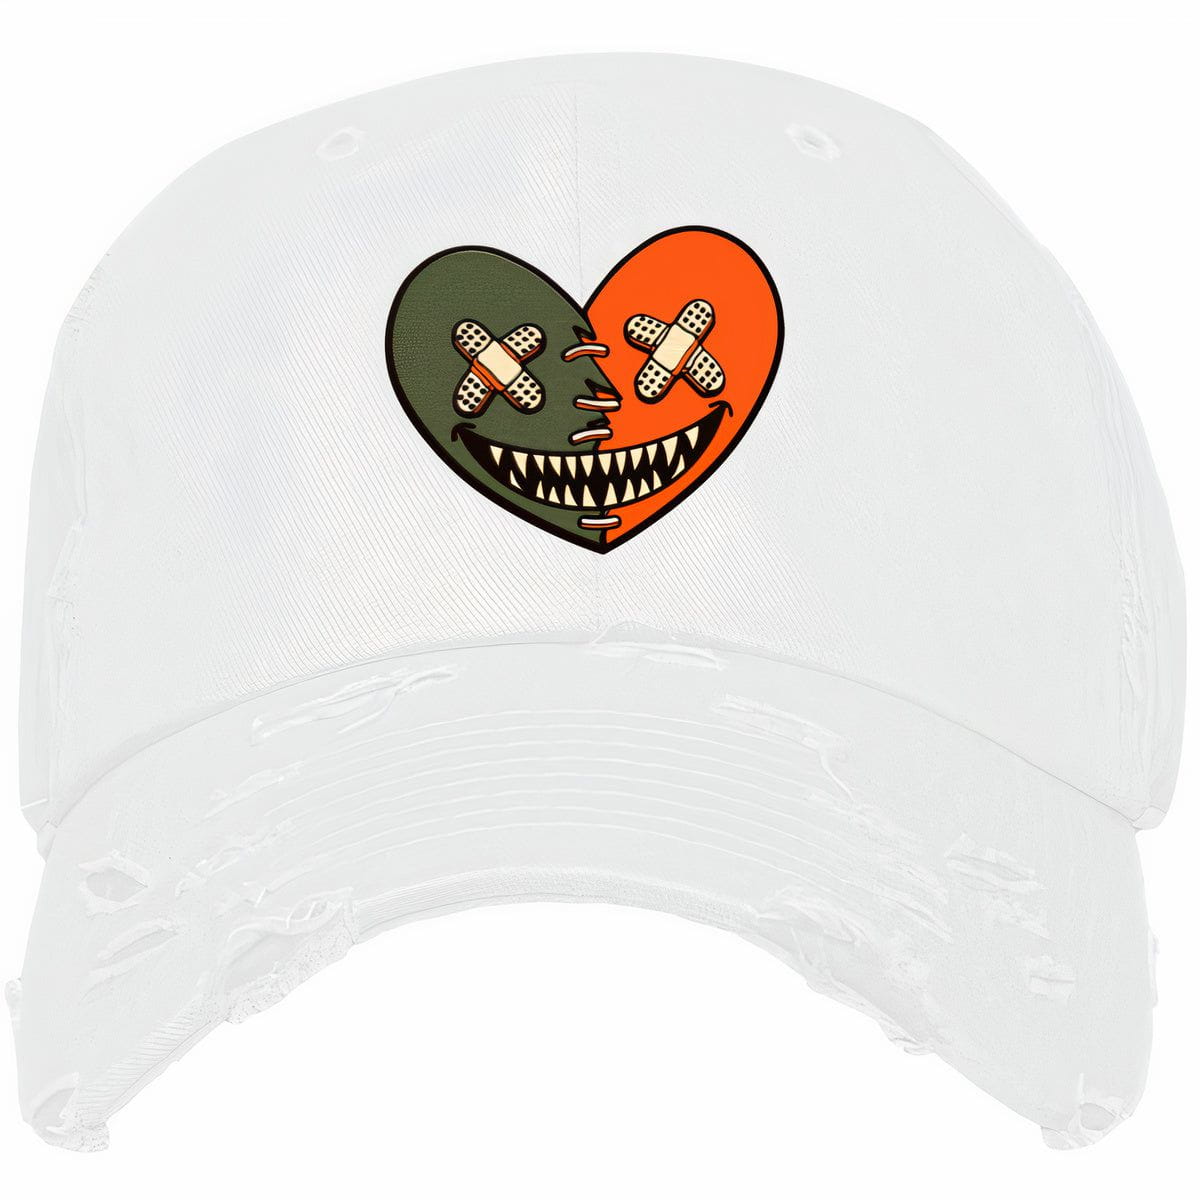 Olive 5s Hats - Jordan Retro 5 Olive Dad Hats - Miami Heart Baws